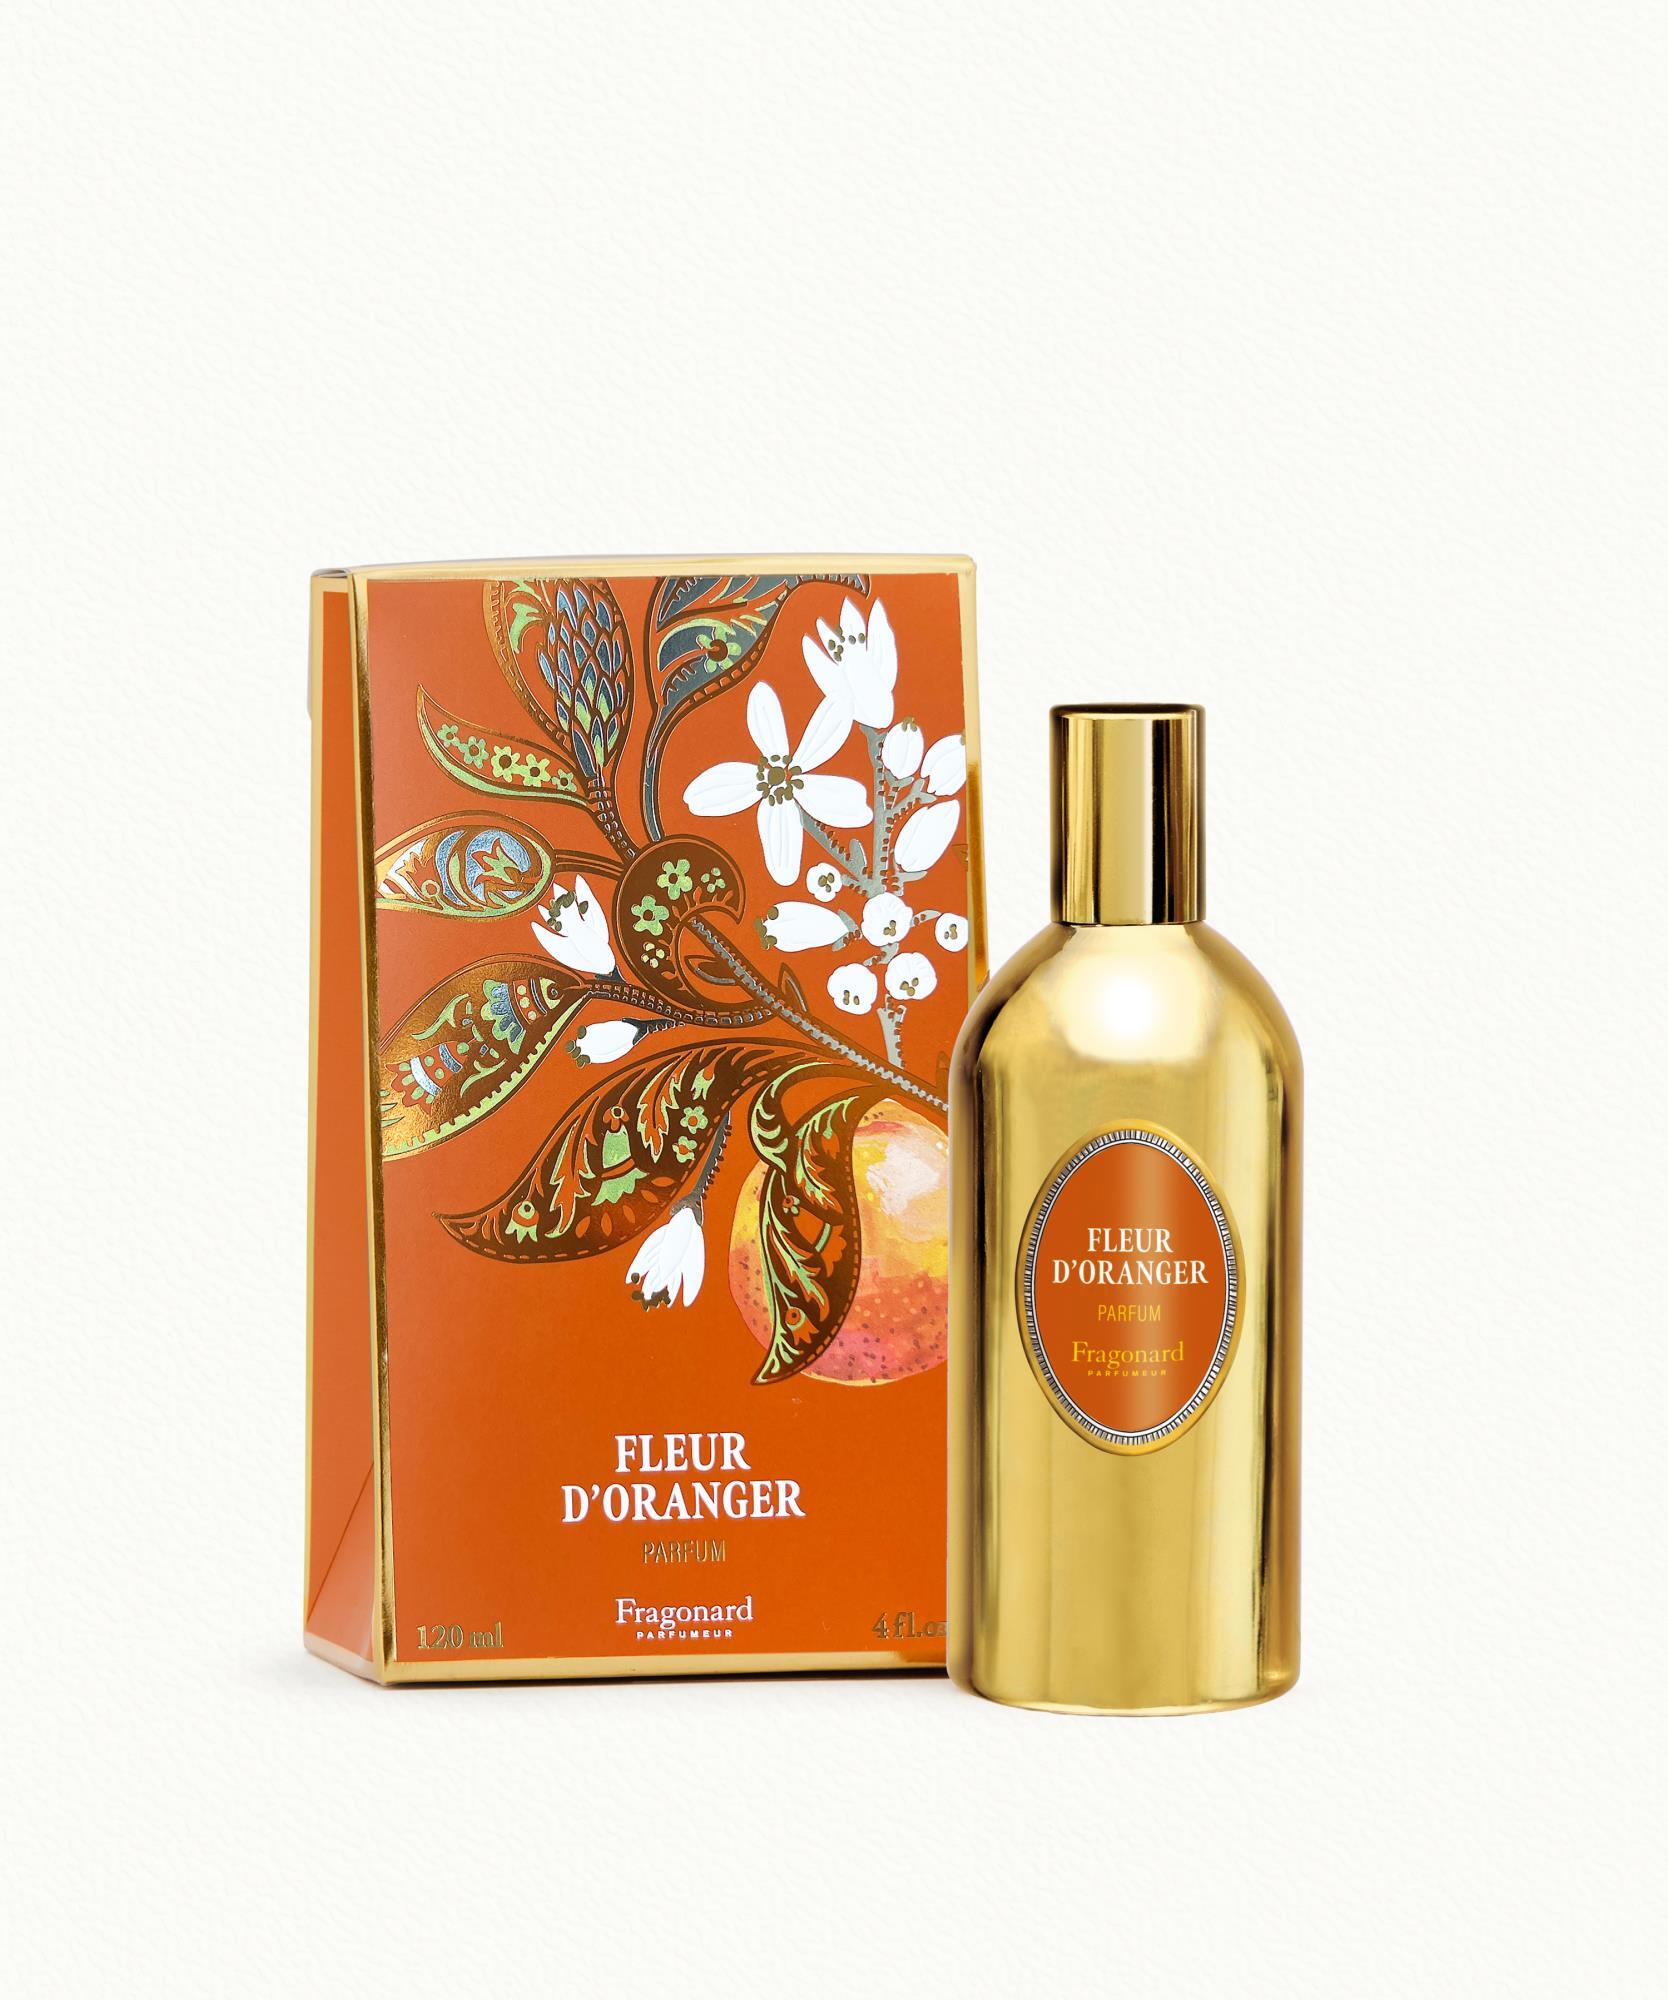 Fleur d'Oranger Perfume 120ml Fragonard - 99,00